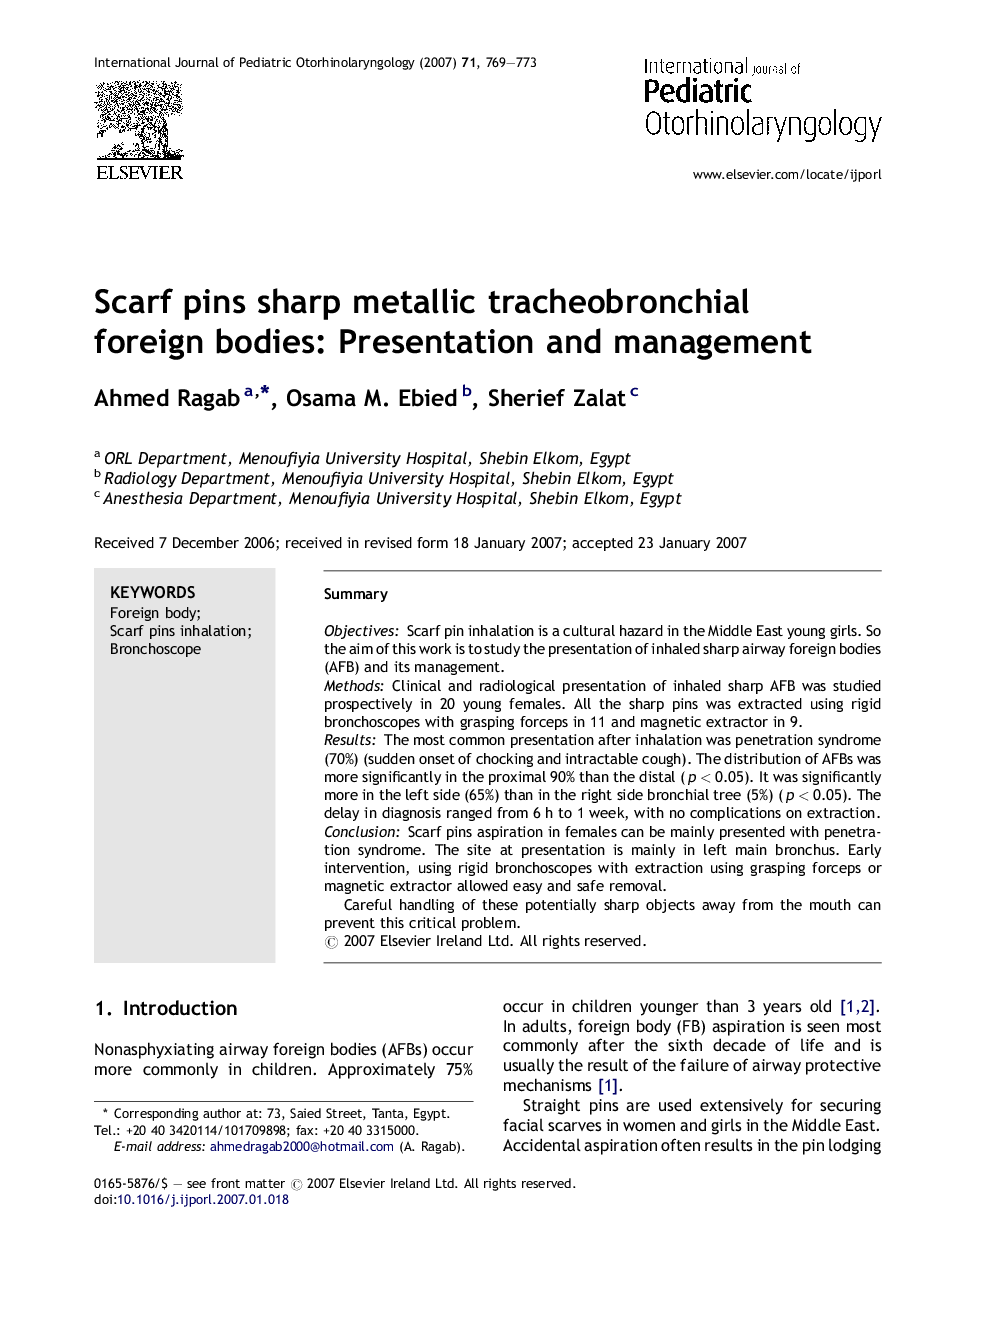 Scarf pins sharp metallic tracheobronchial foreign bodies: Presentation and management